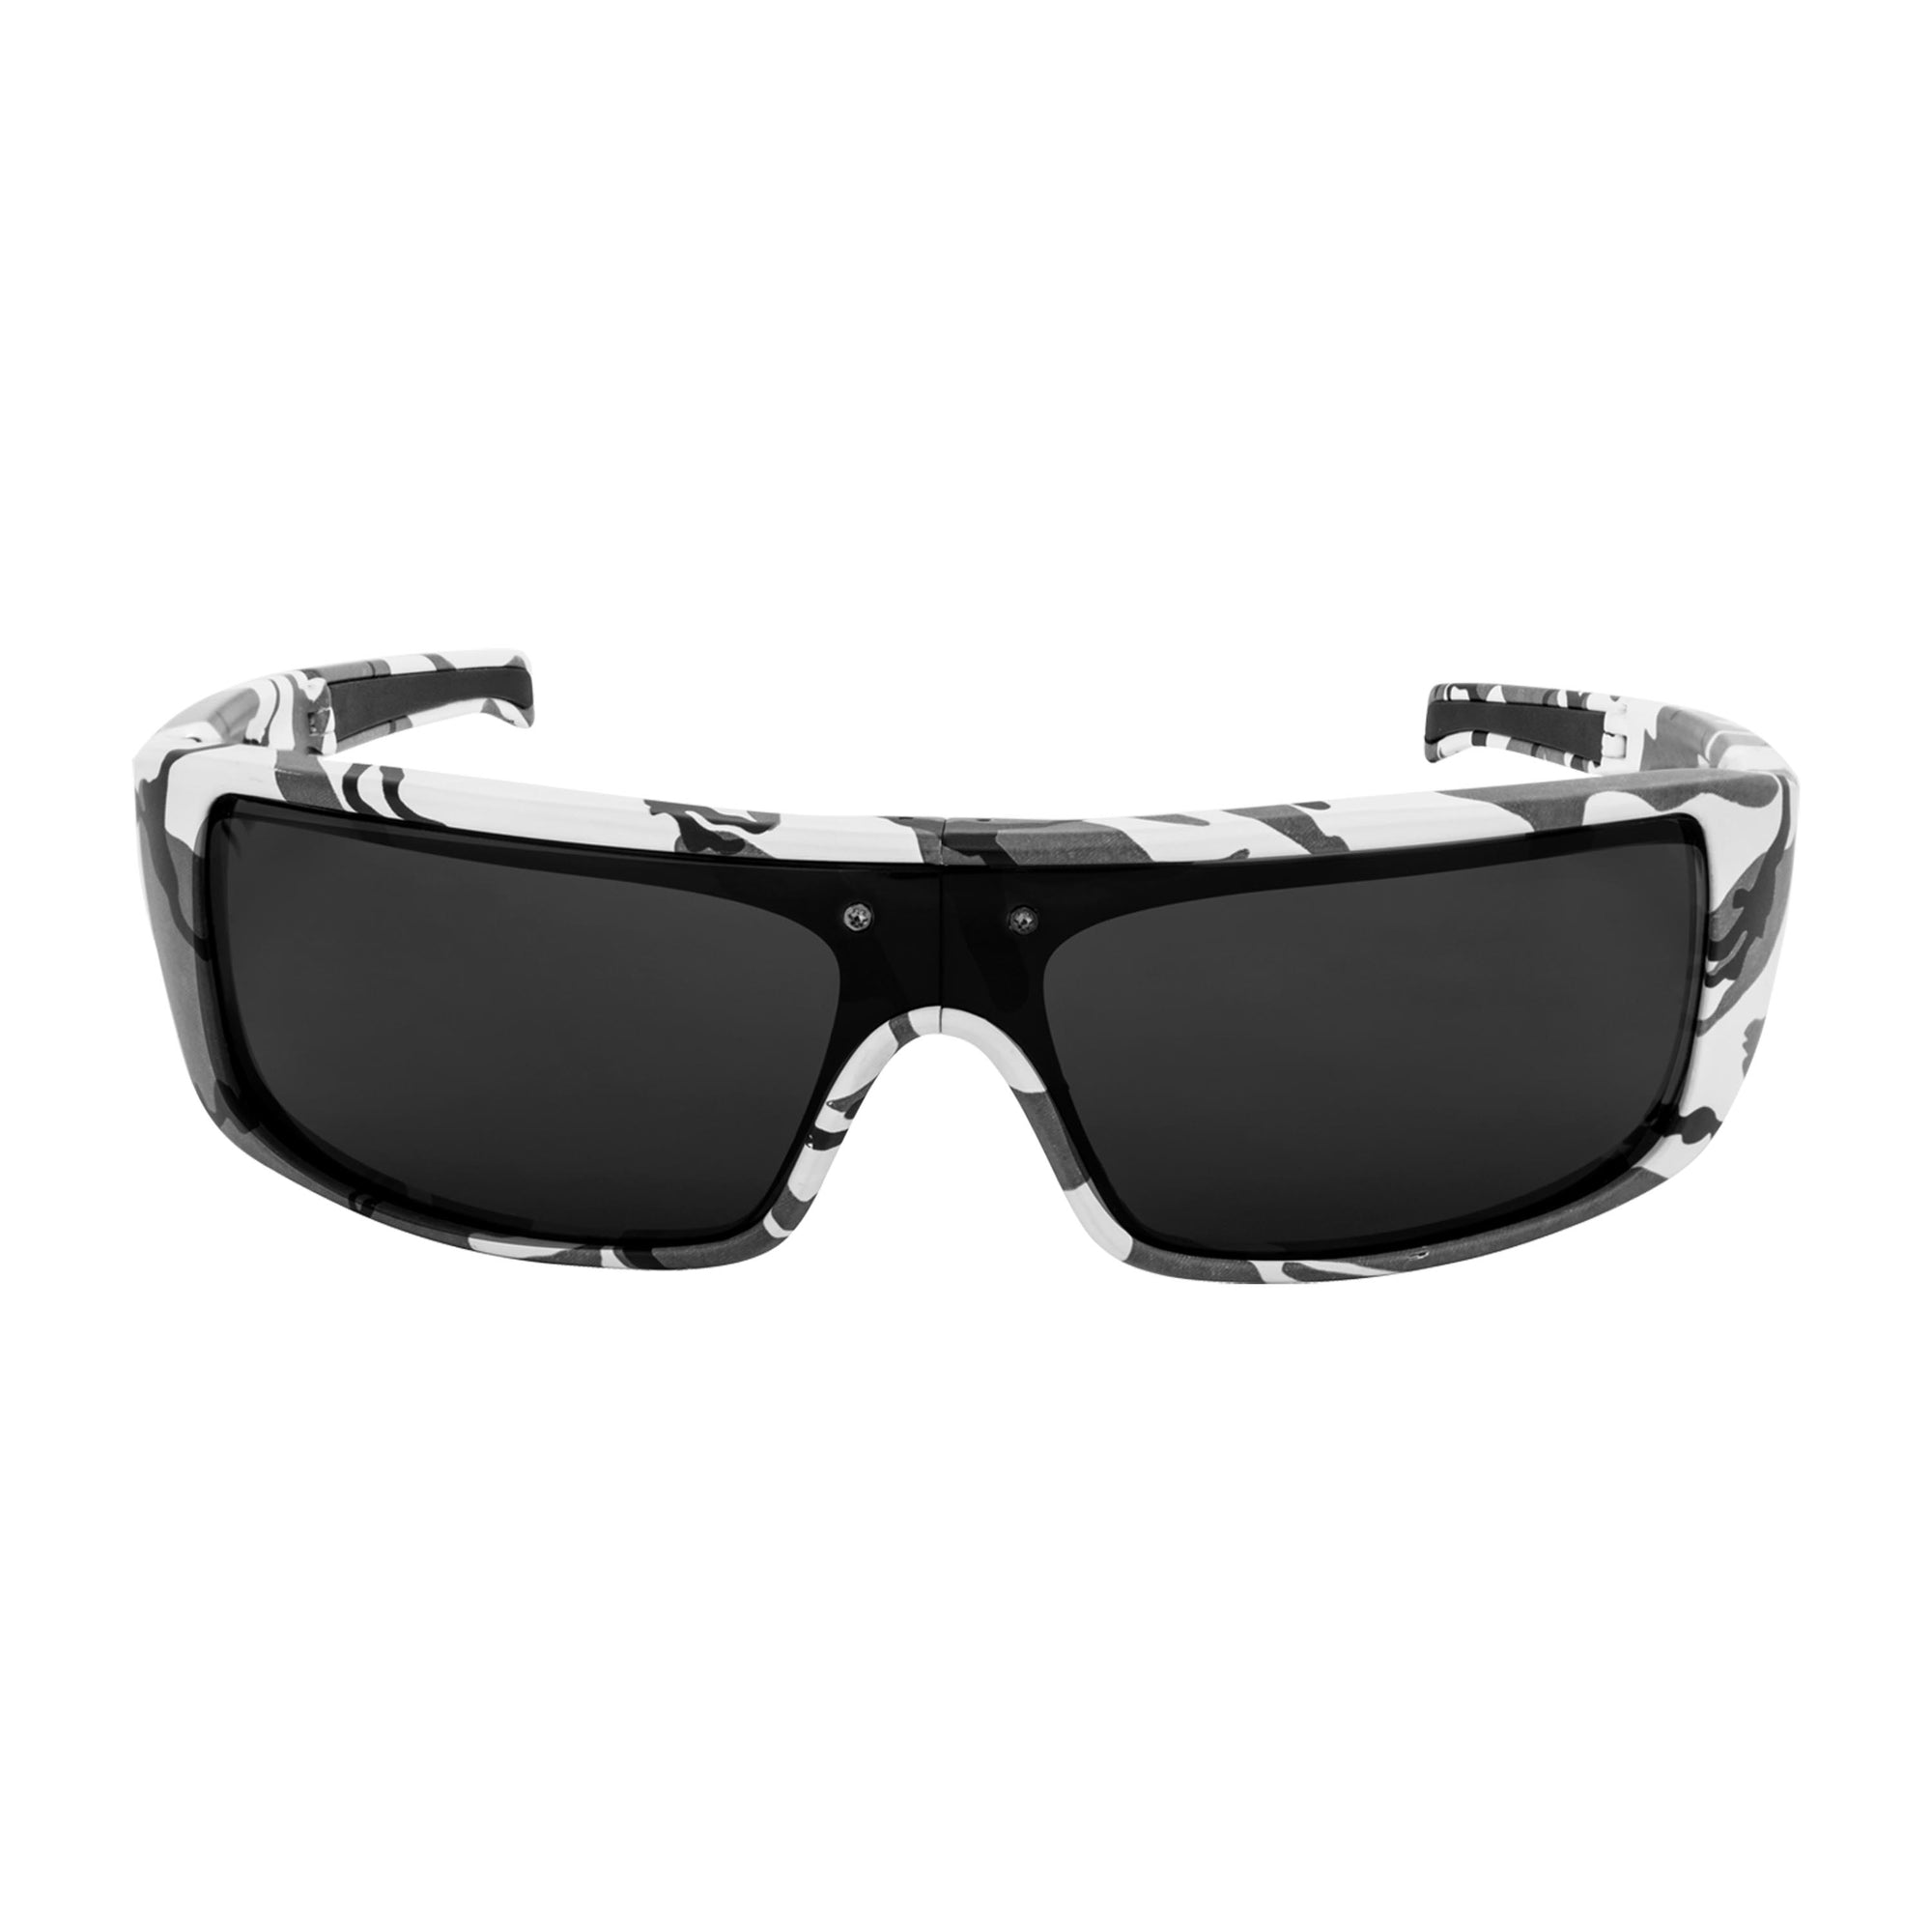 Popticals, Premium Compact Sunglasses, PopGear, 010050-CCGS, Standard Sunglasses, Matte White Camo Frame, Gray Lenses, Front View